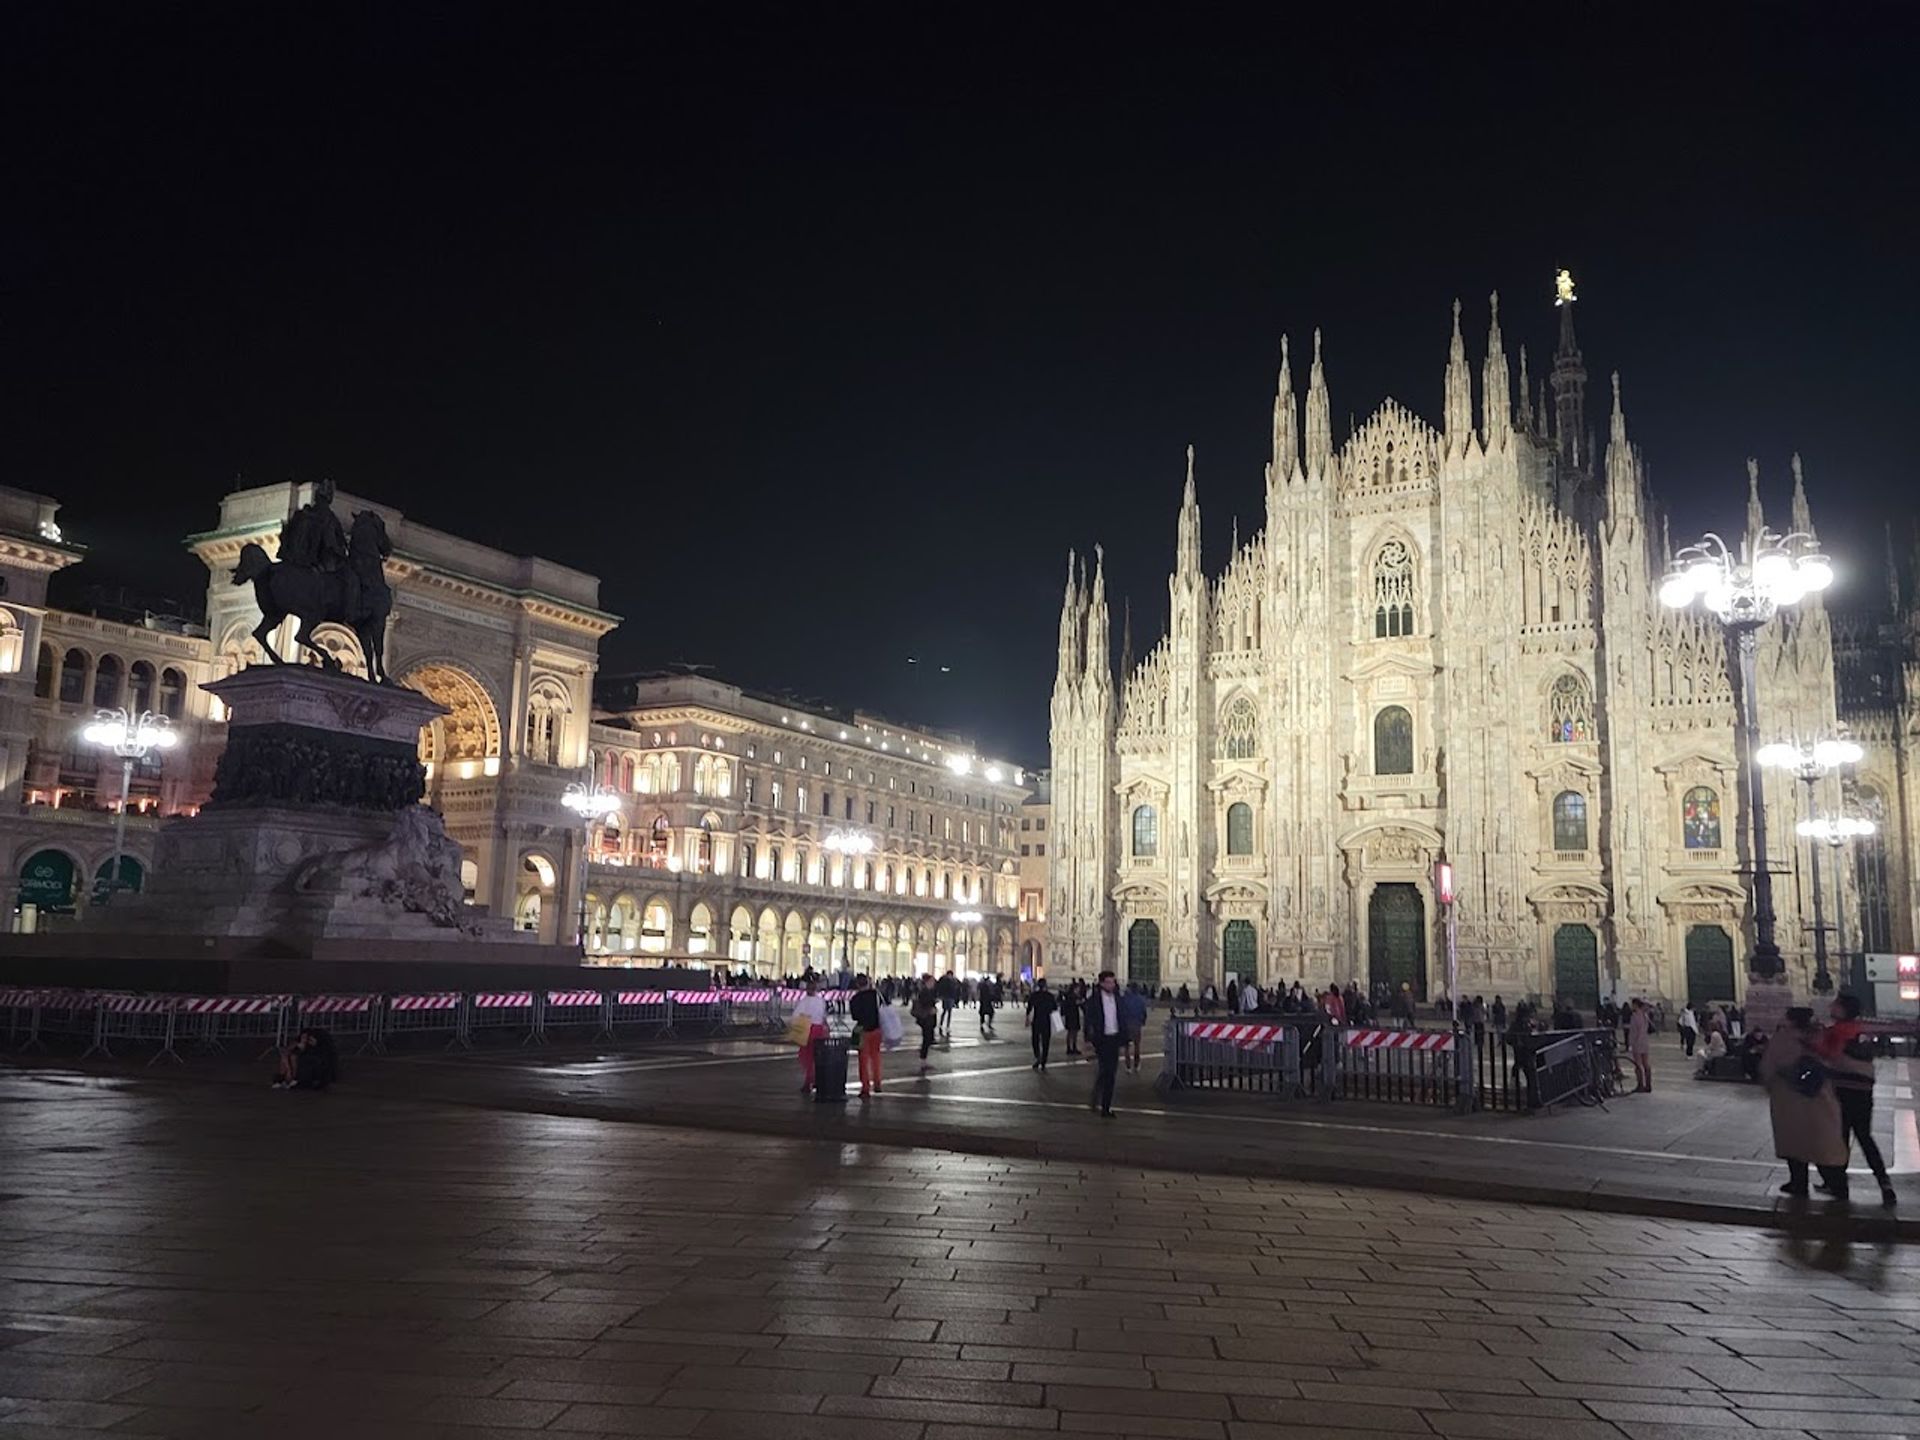 Duomo Di Milano with Galleria Vittorio Emanuele II in the background